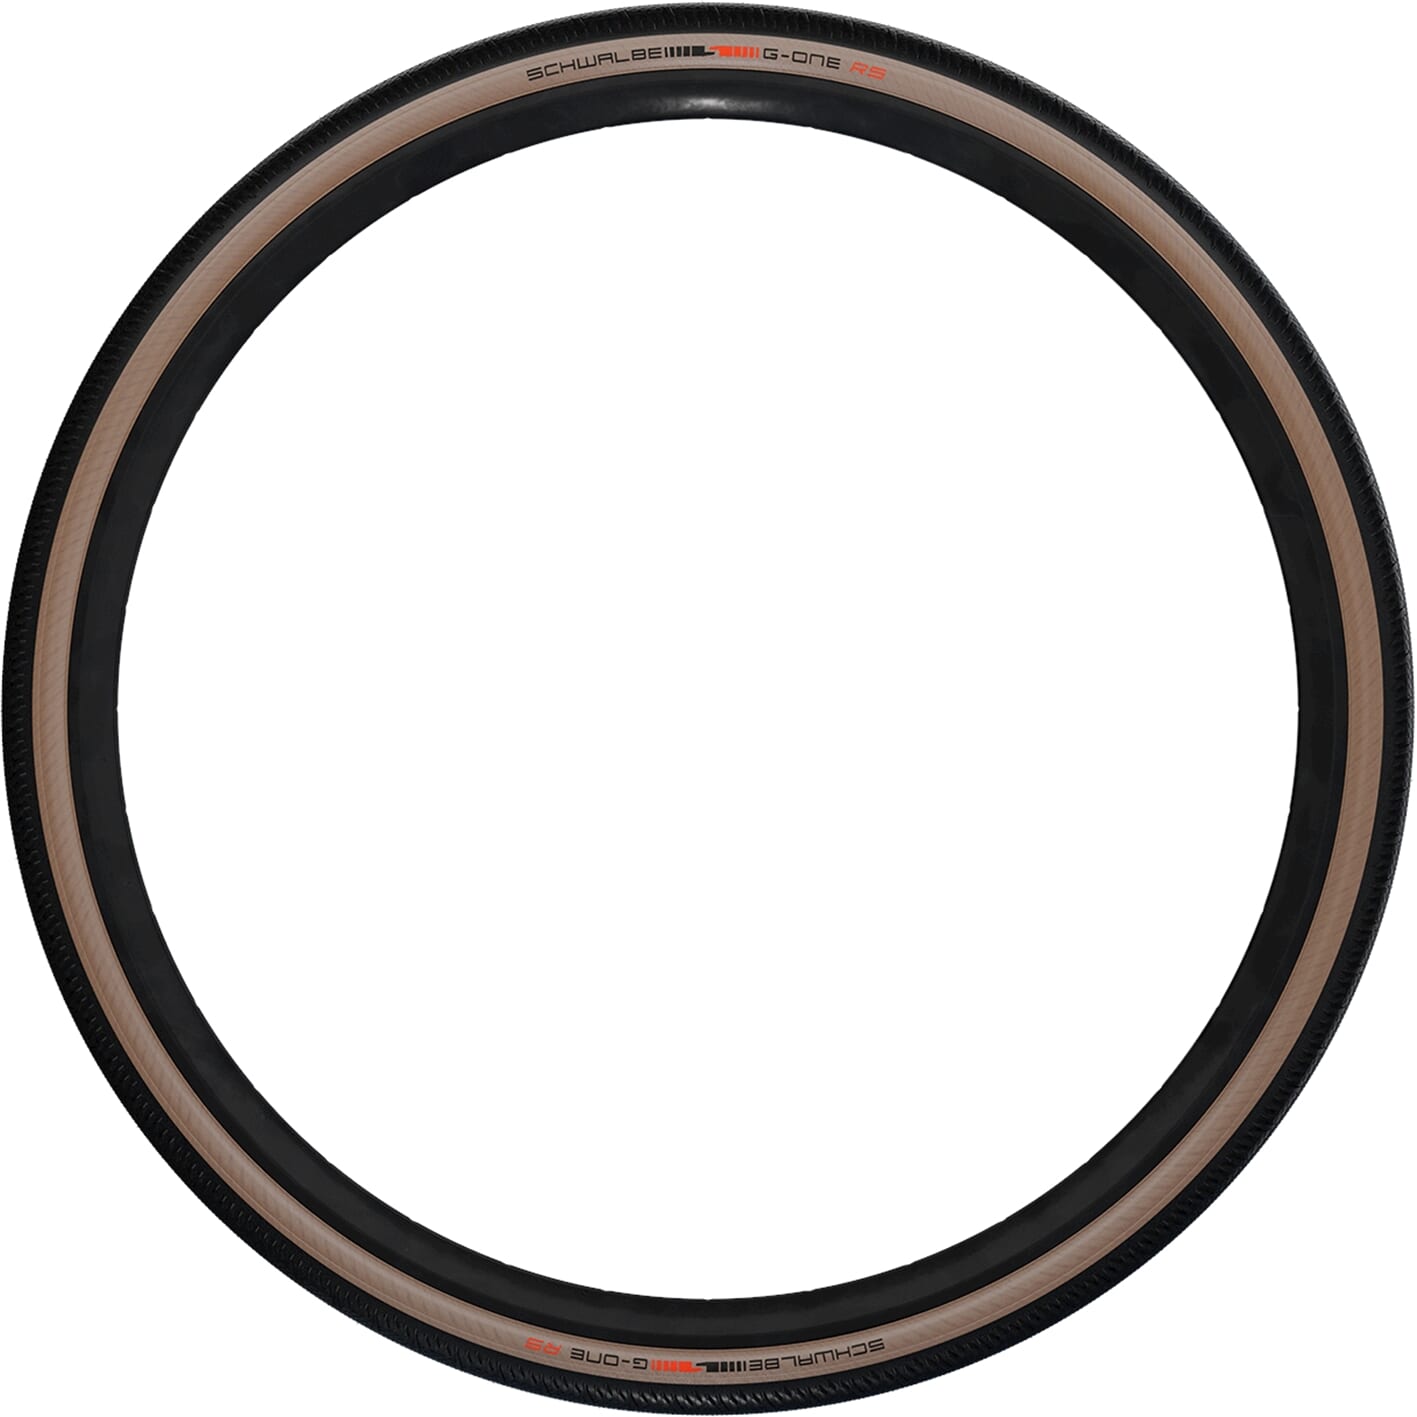 Schwalbe Tire 28-1.70 (45-622) G-One RS EVO ZW Skin Pleging Band